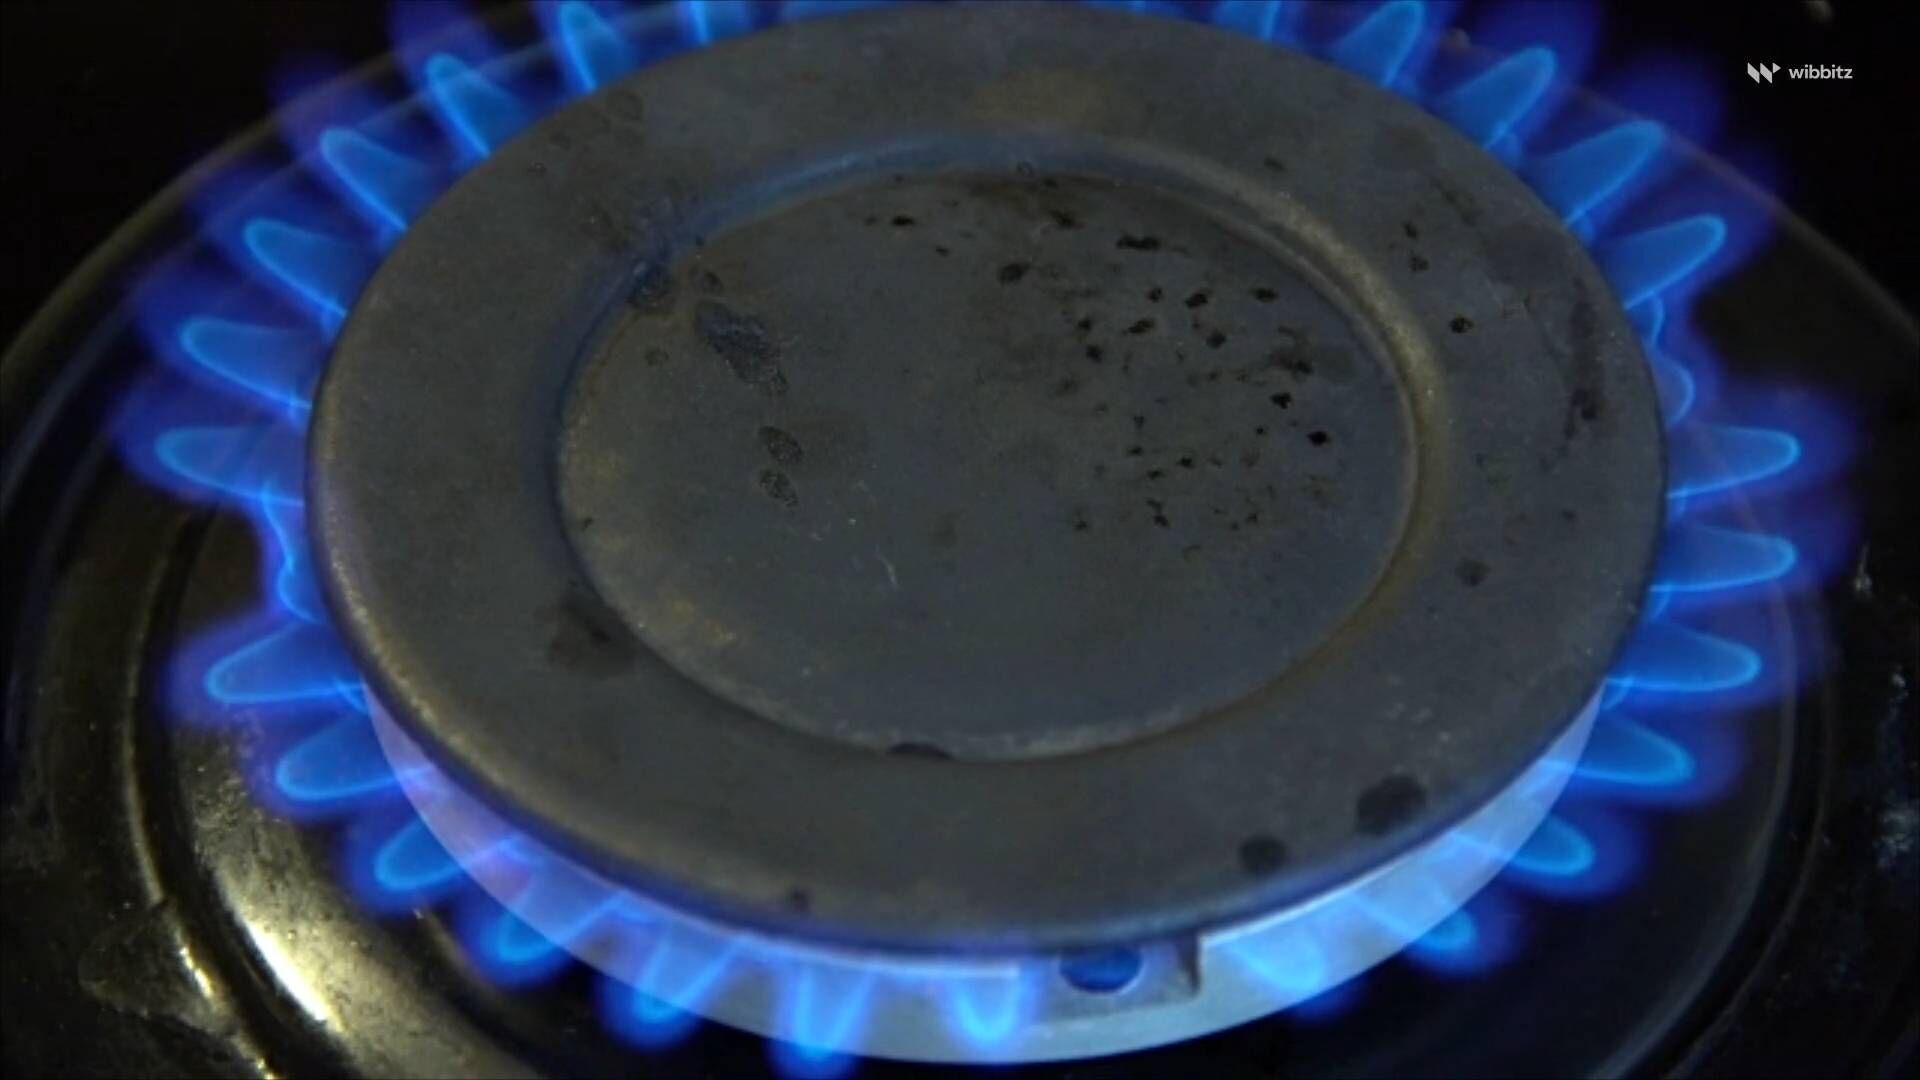 Gas-Burning Stoves Still Leak Methane When Turned Off